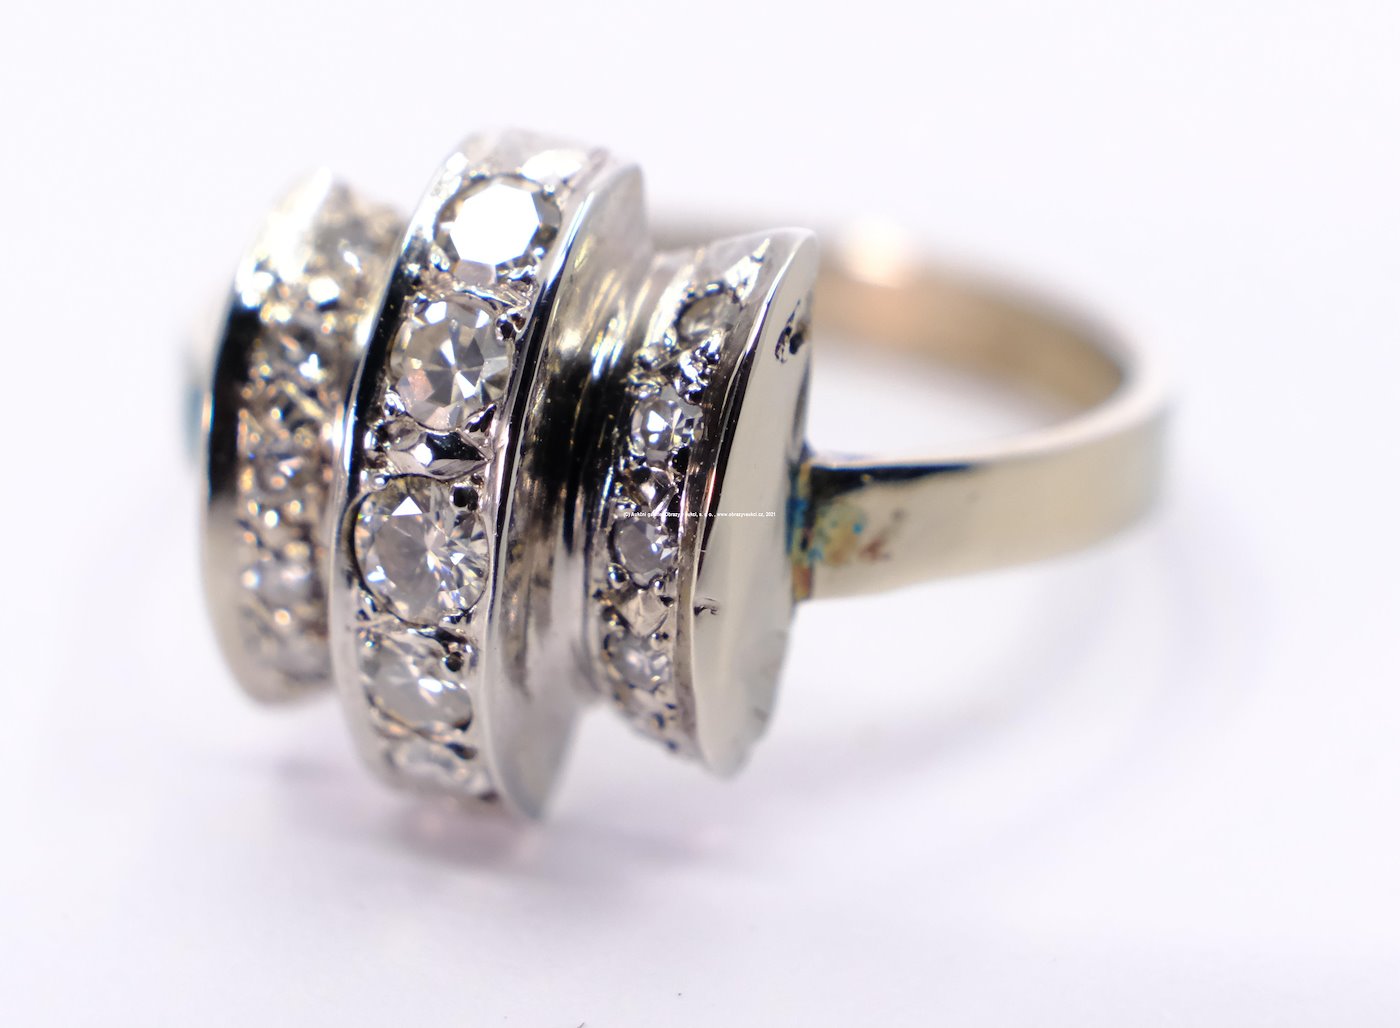 .. - Briliantový prsten, zlato 710/1000 a 375/1000, hrubá hmotnost 2,95 g